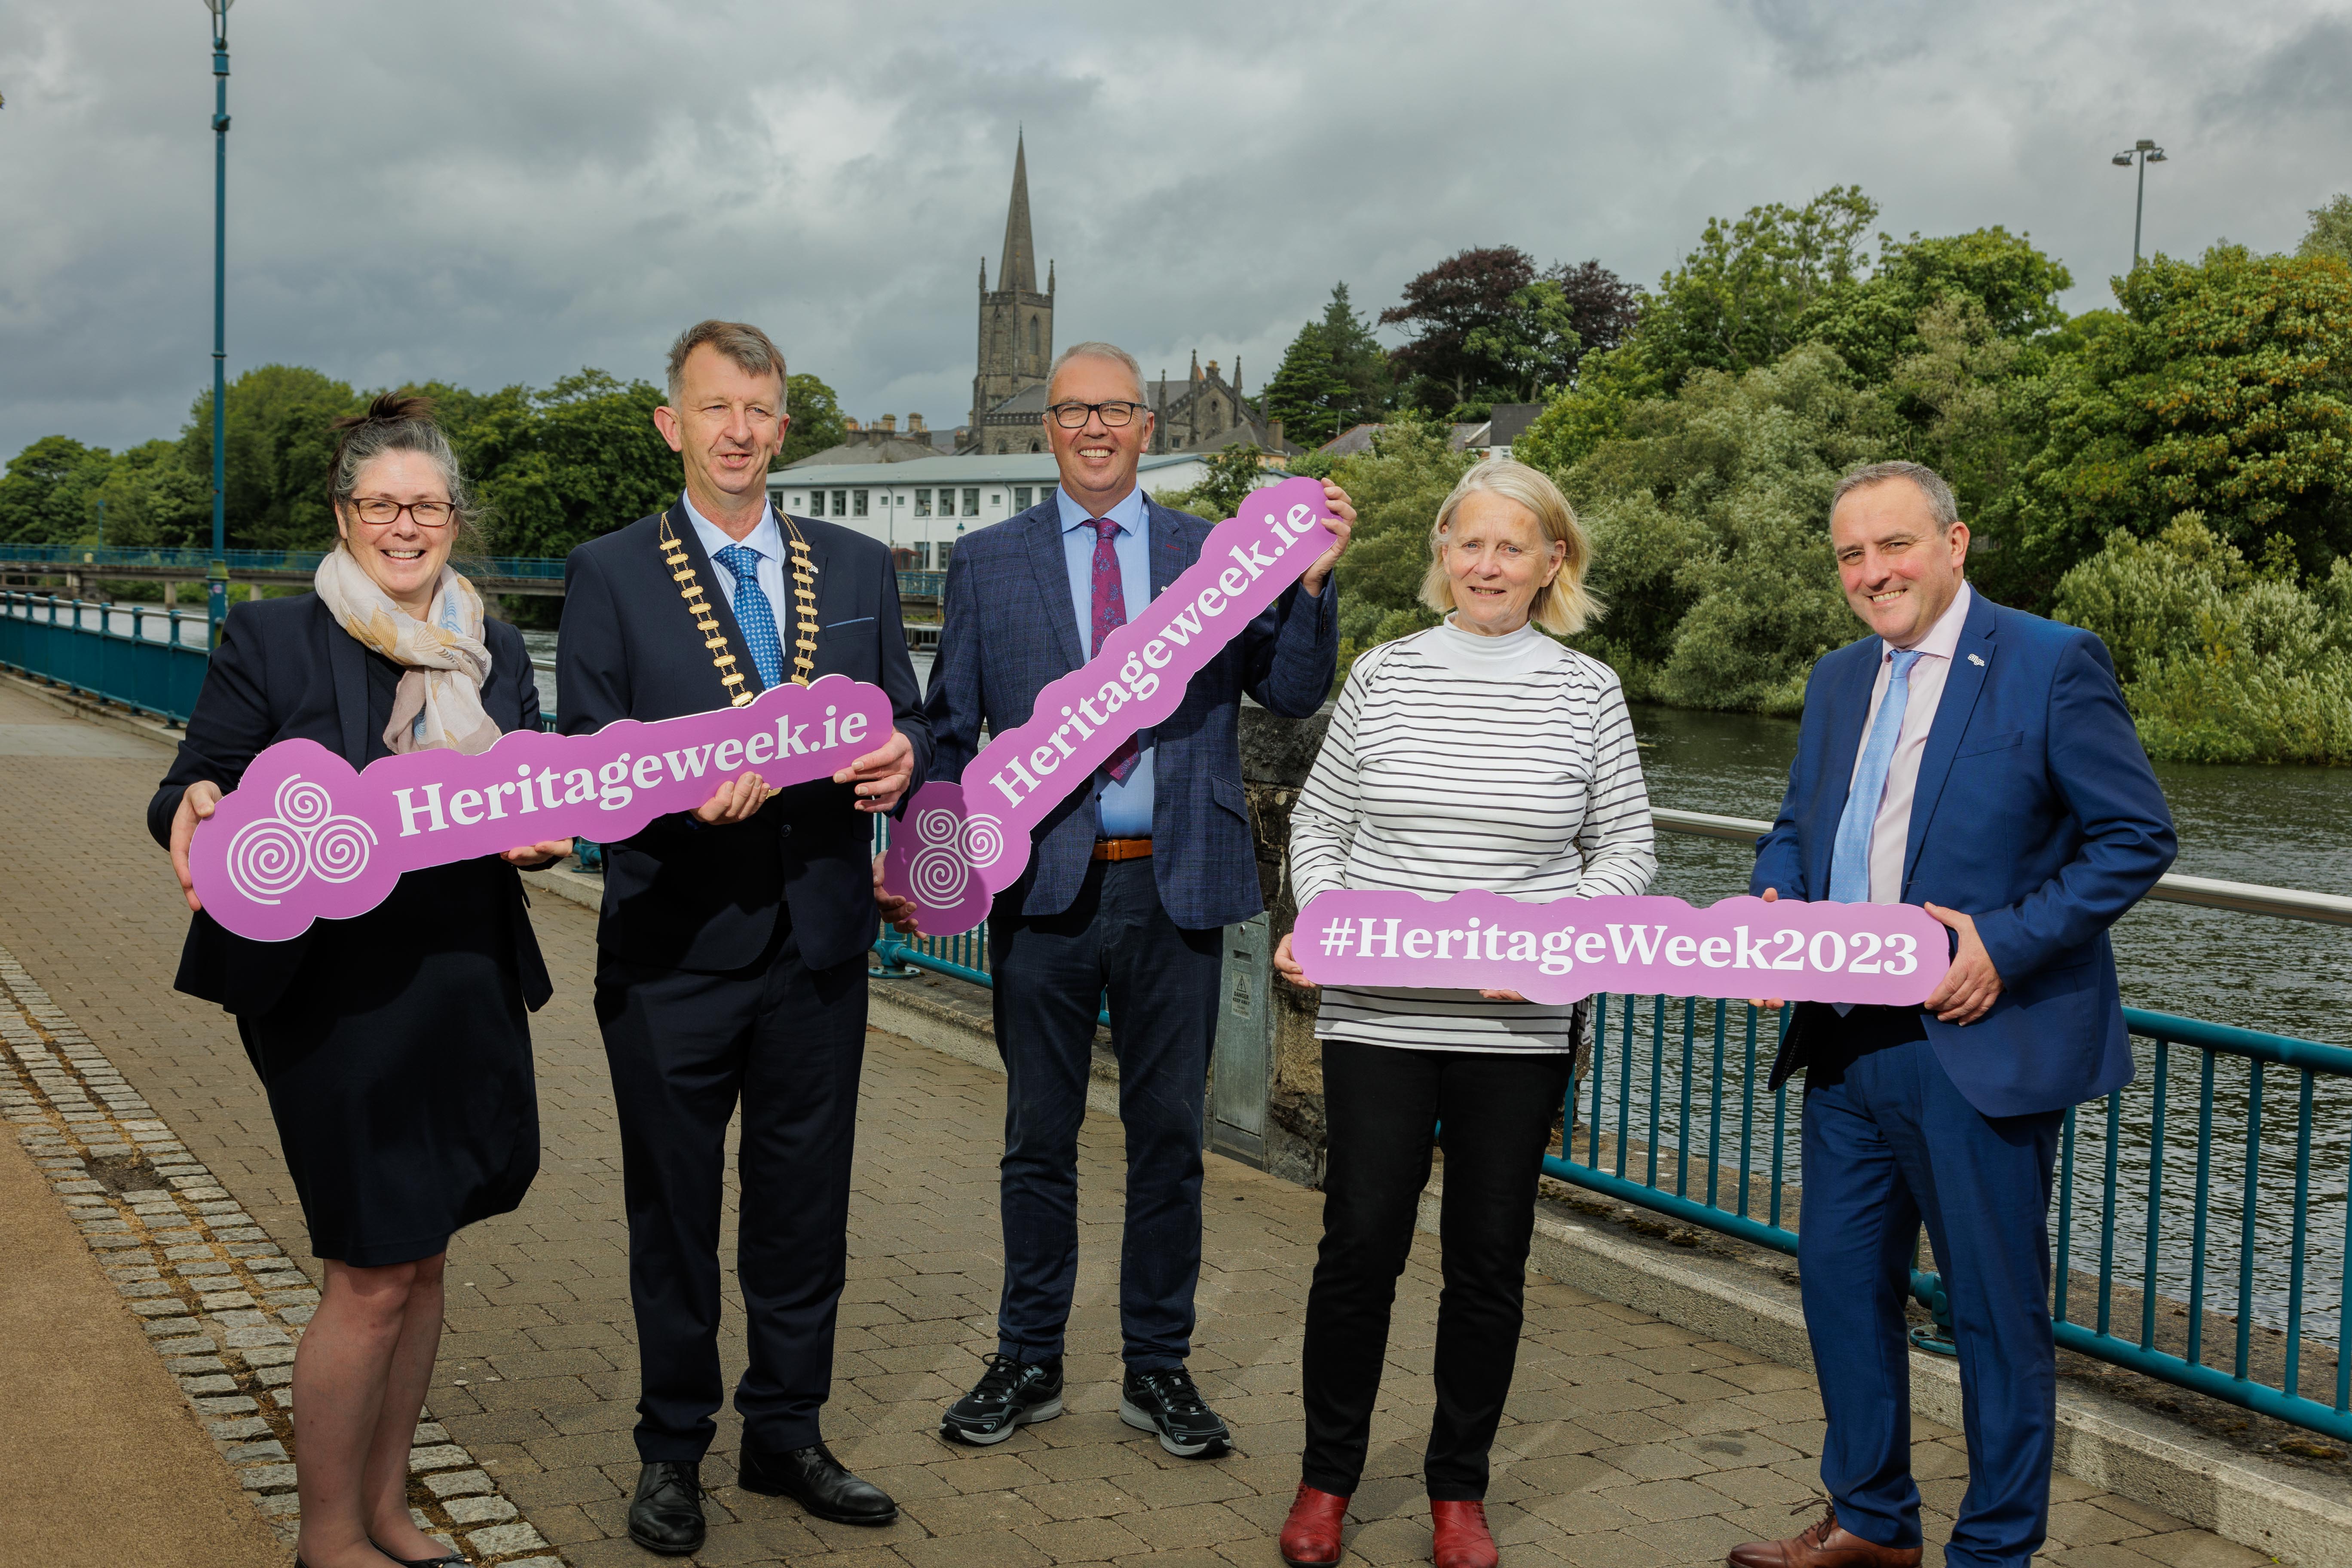 The Countdown is on for Heritage Week in Sligo